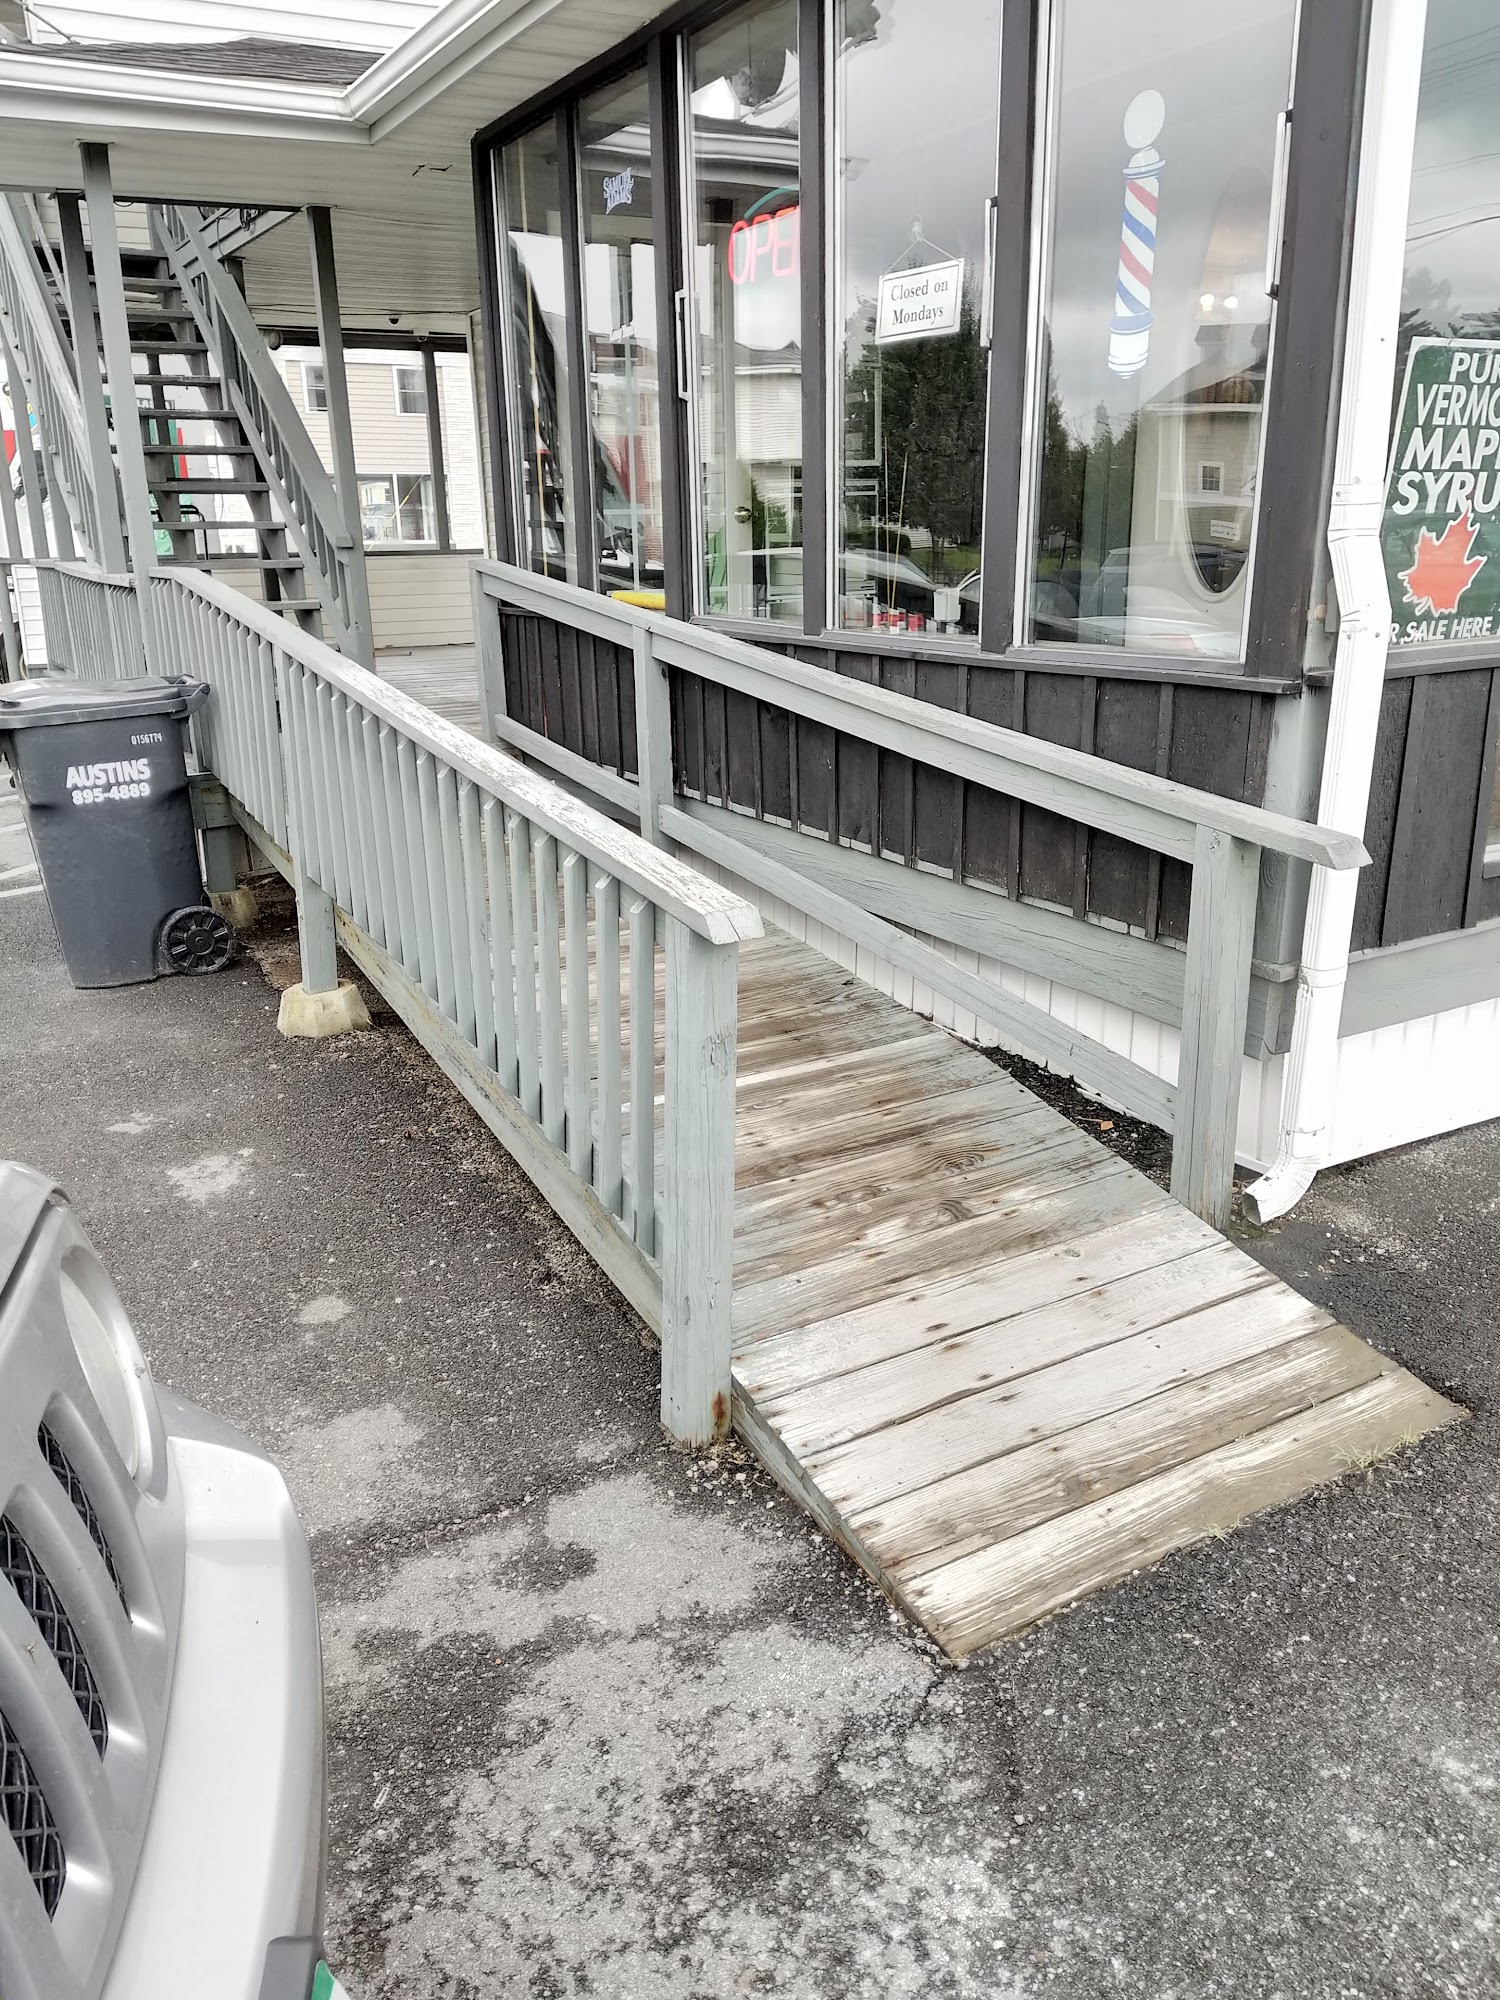 Eastside Barber Shop Entrance from the side door OR rear handicap ramp, 472 Main St, Newport Vermont 05855